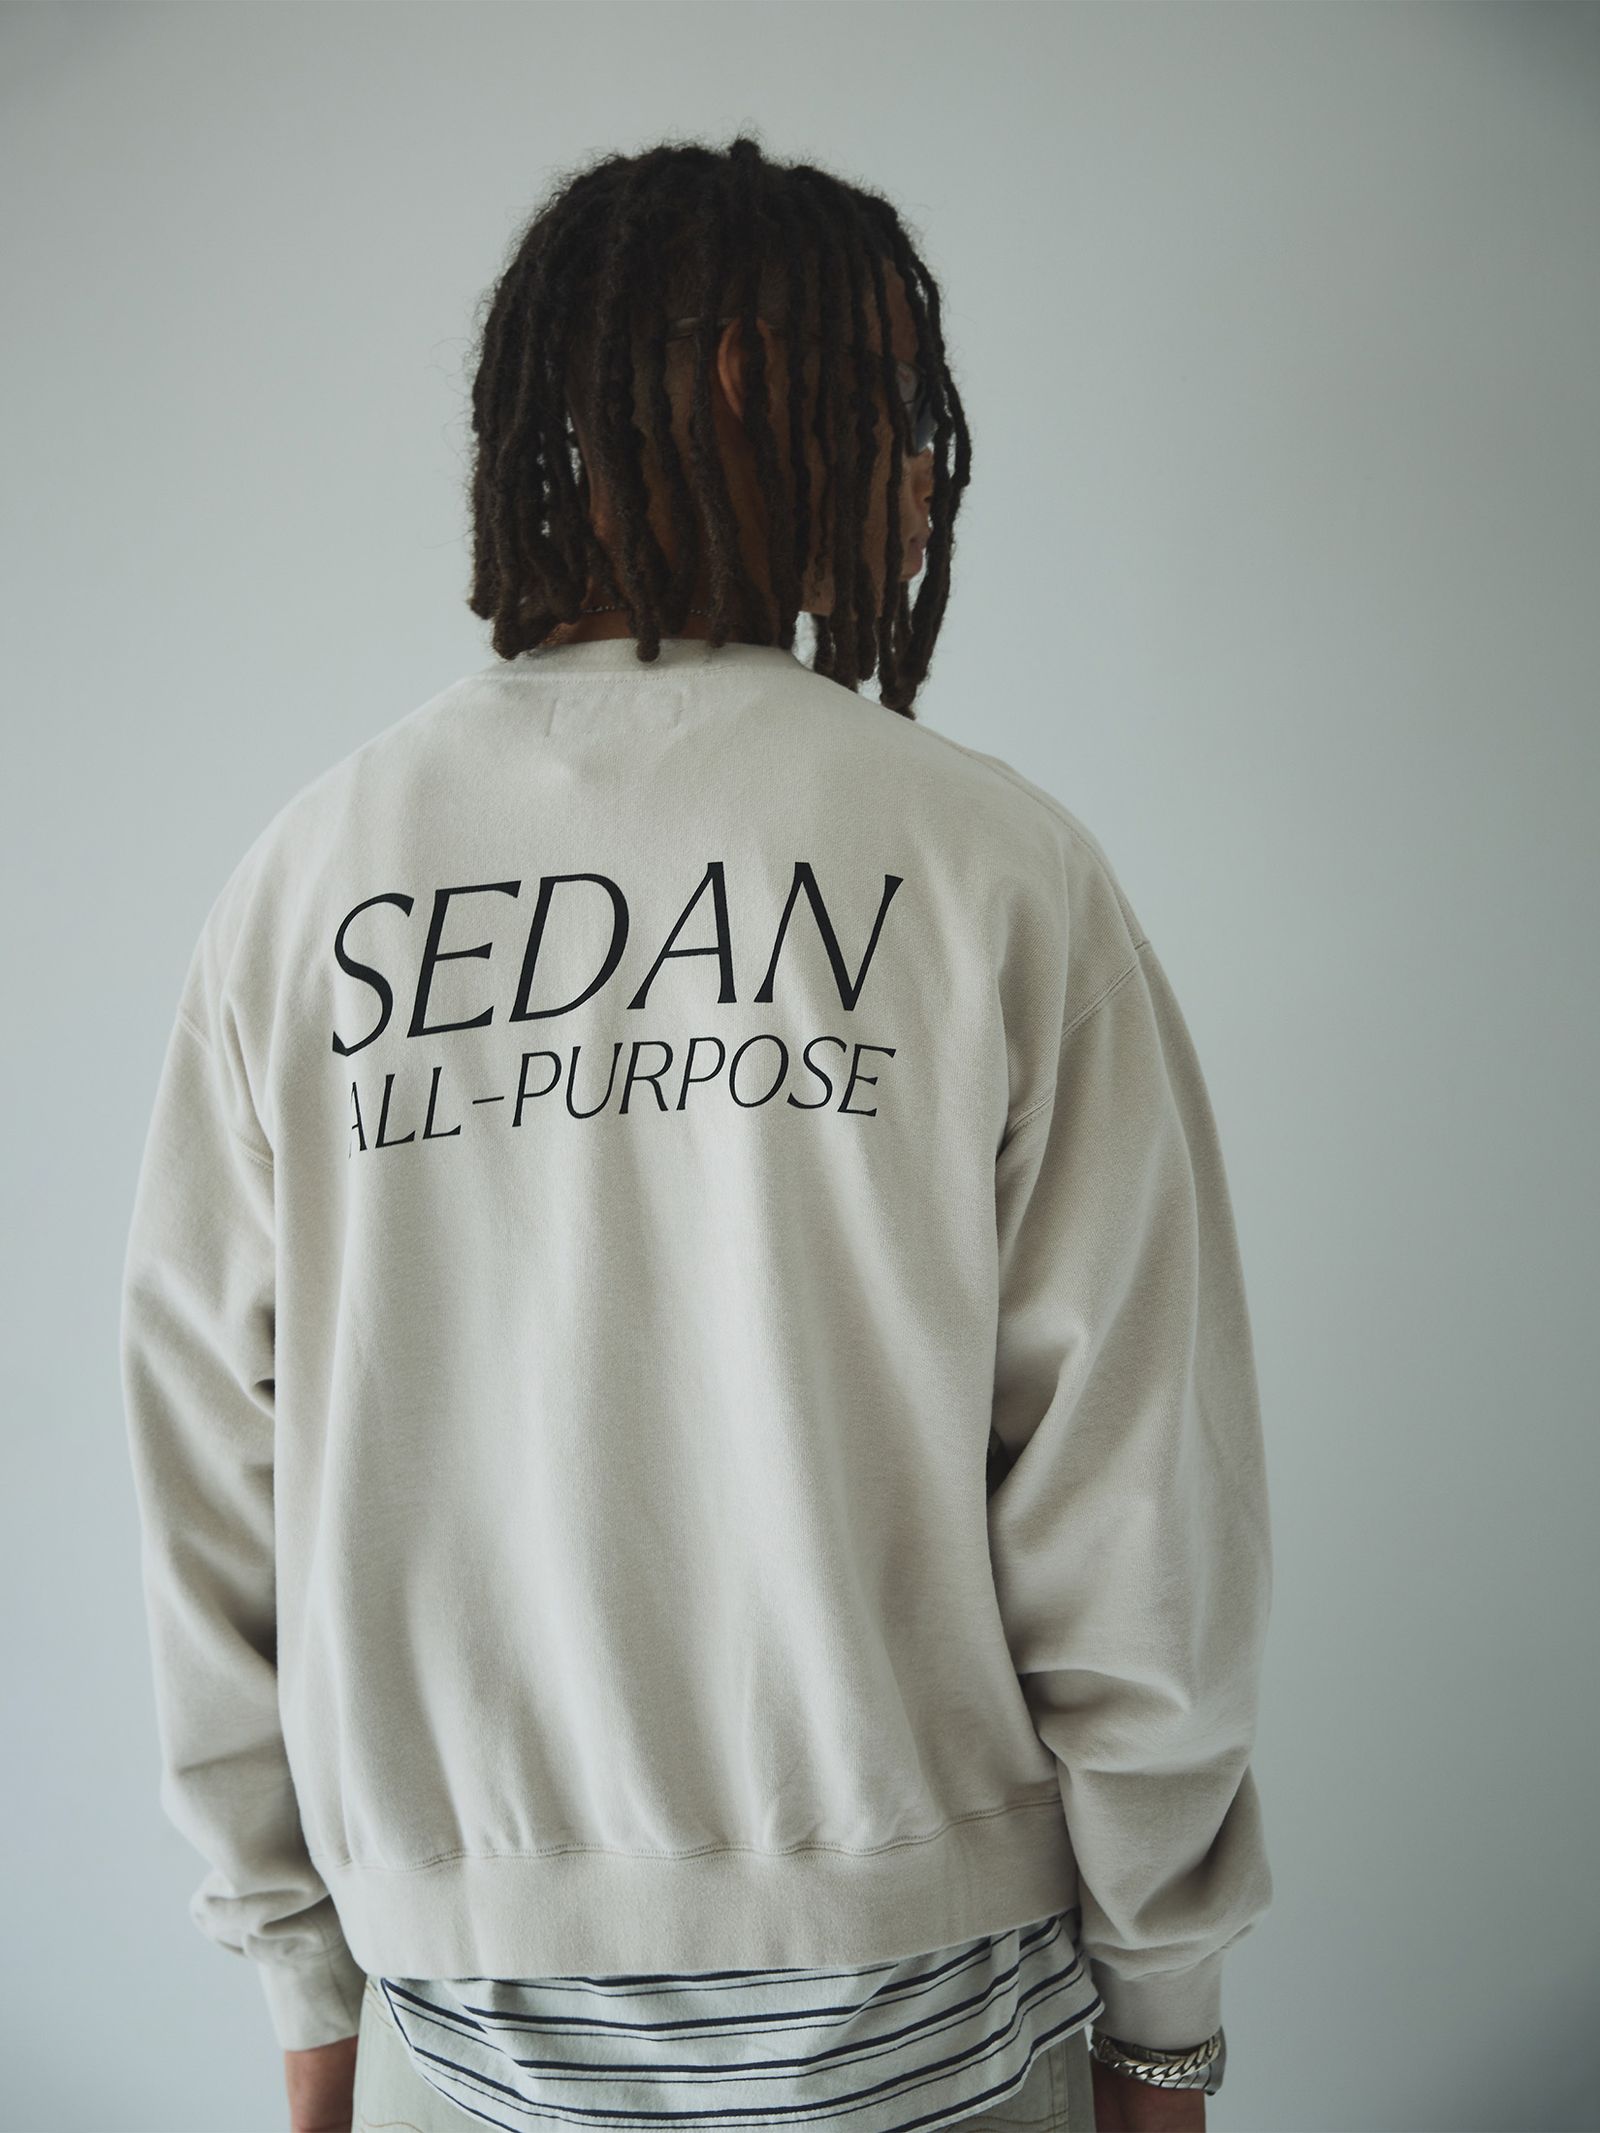 SEDAN ALL-PURPOSE - セダンオールパーパス SS24 OG Logo Sweatshirt 